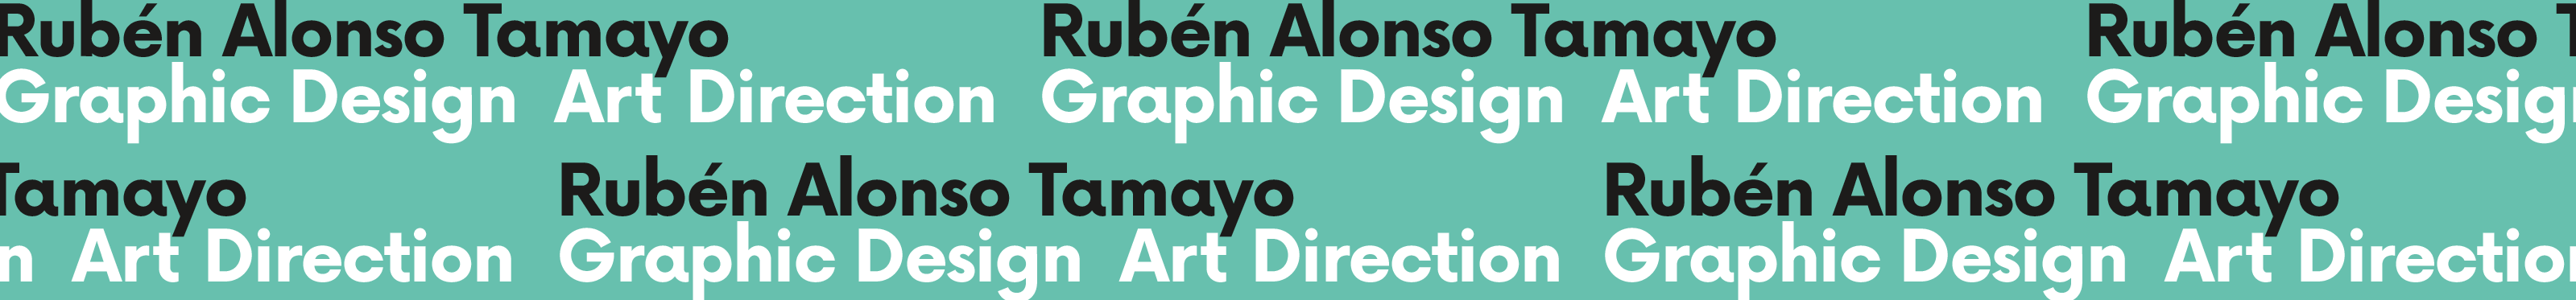 Rubén Alonso Tamayo's profile banner